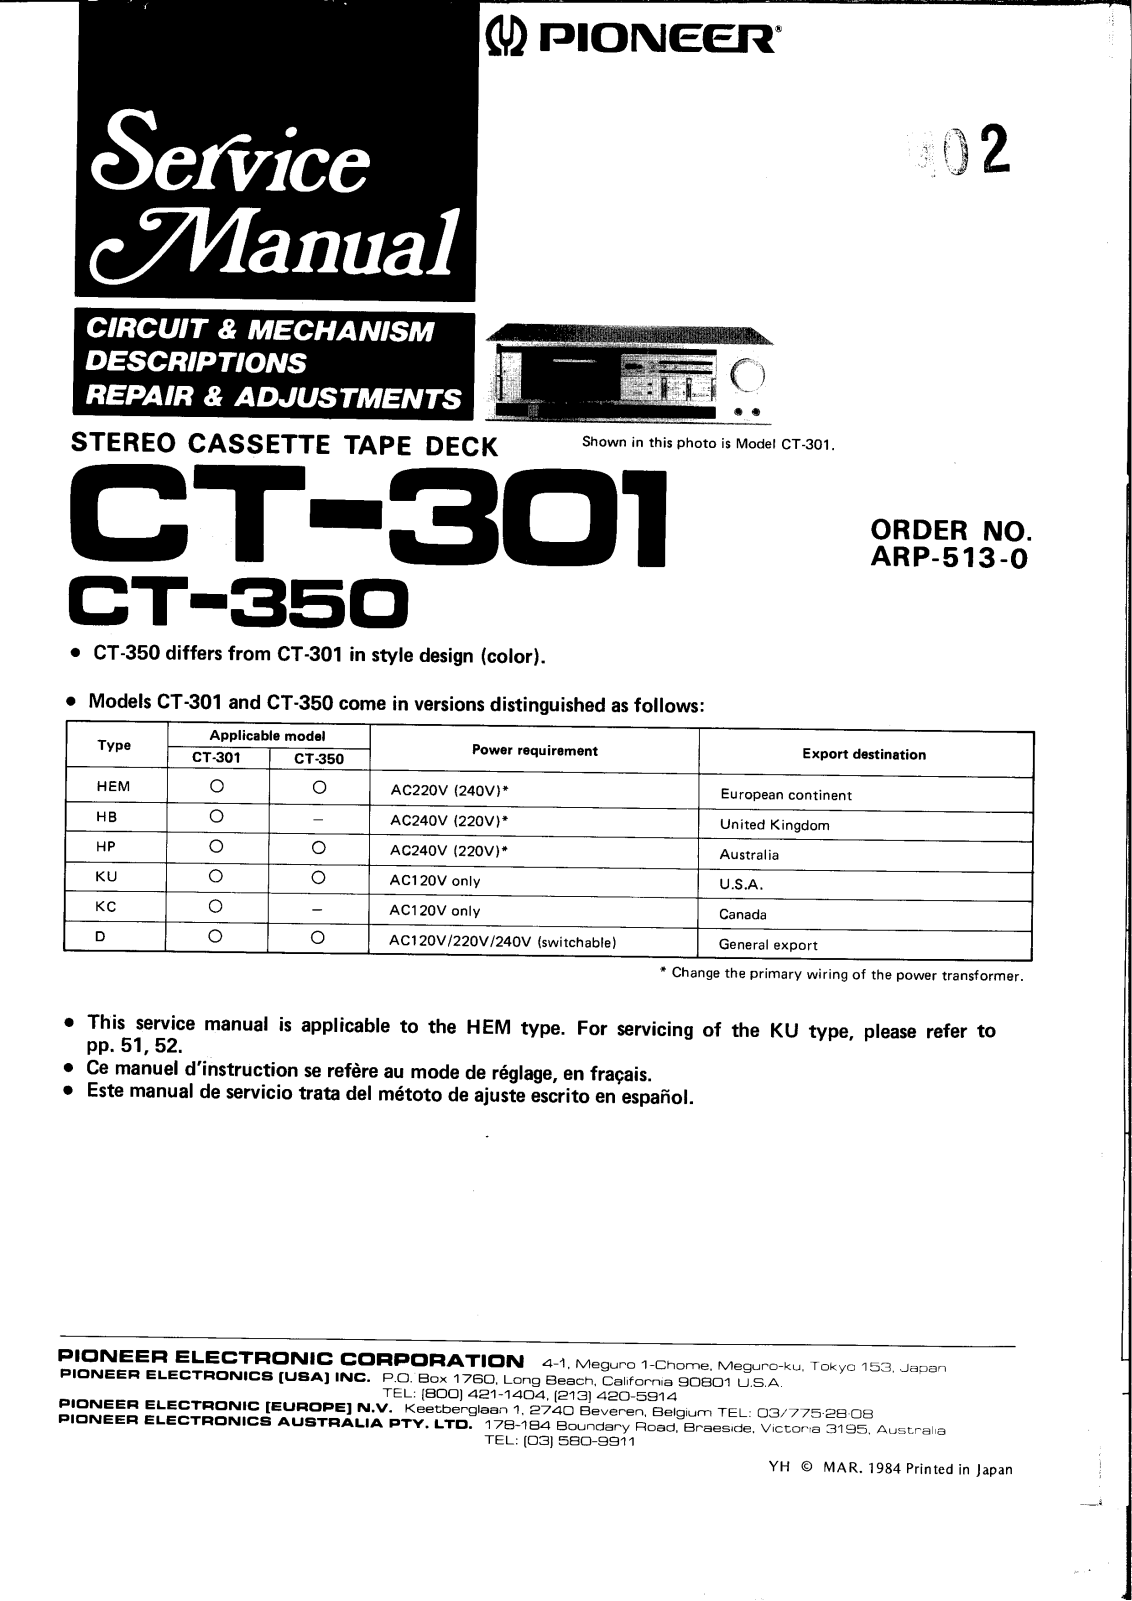 Pioneer CT-301, CT-350 Service manual